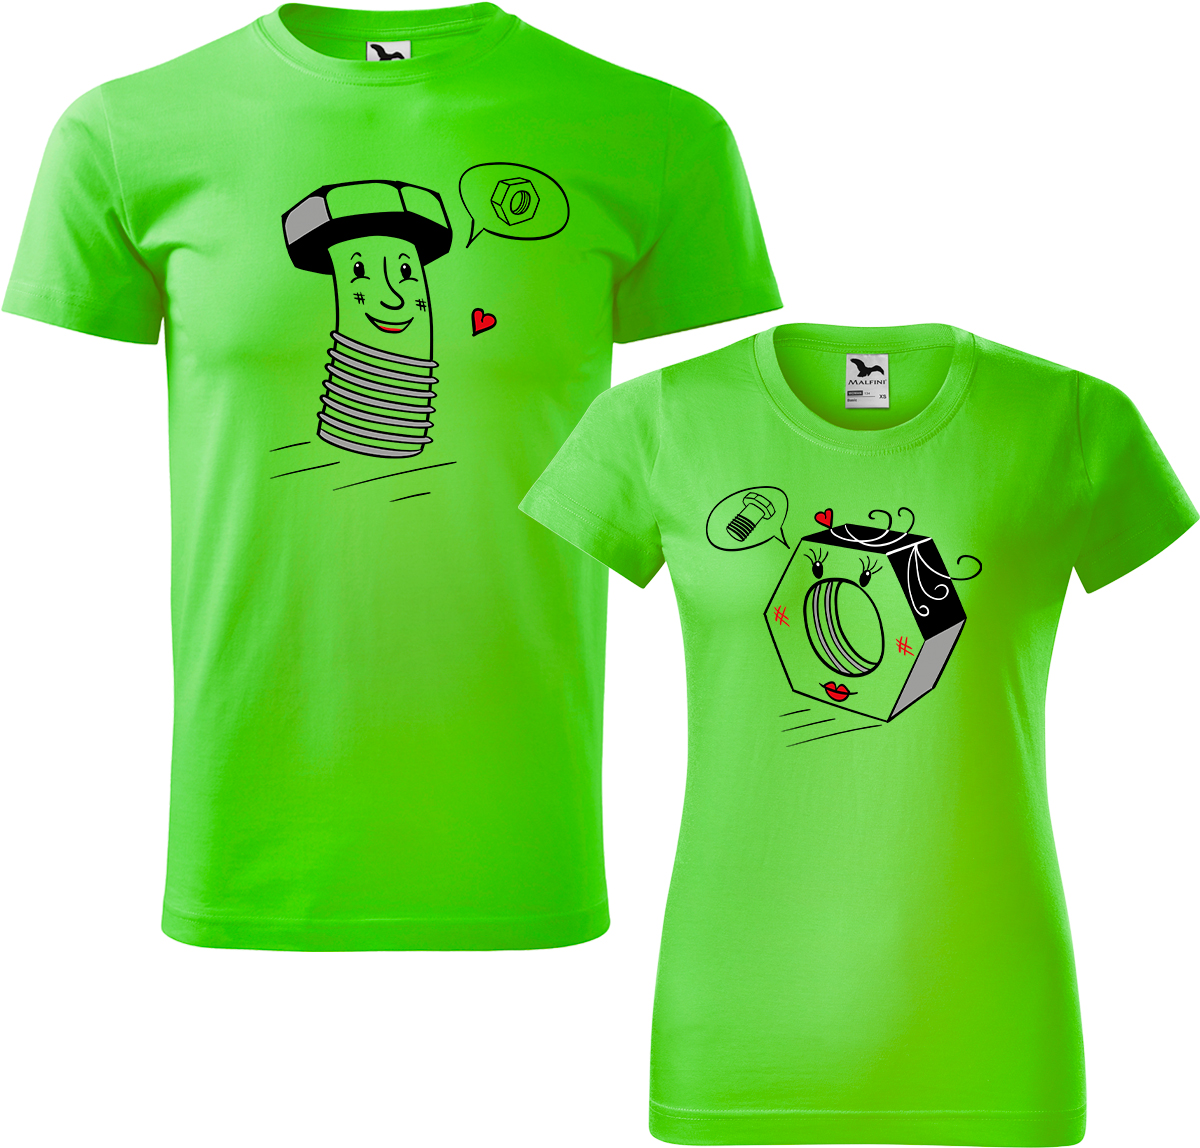 Trička pro páry - Šroubek a matička Barva: Apple Green (92), Velikost dámské tričko: 3XL, Velikost pánské tričko: 4XL